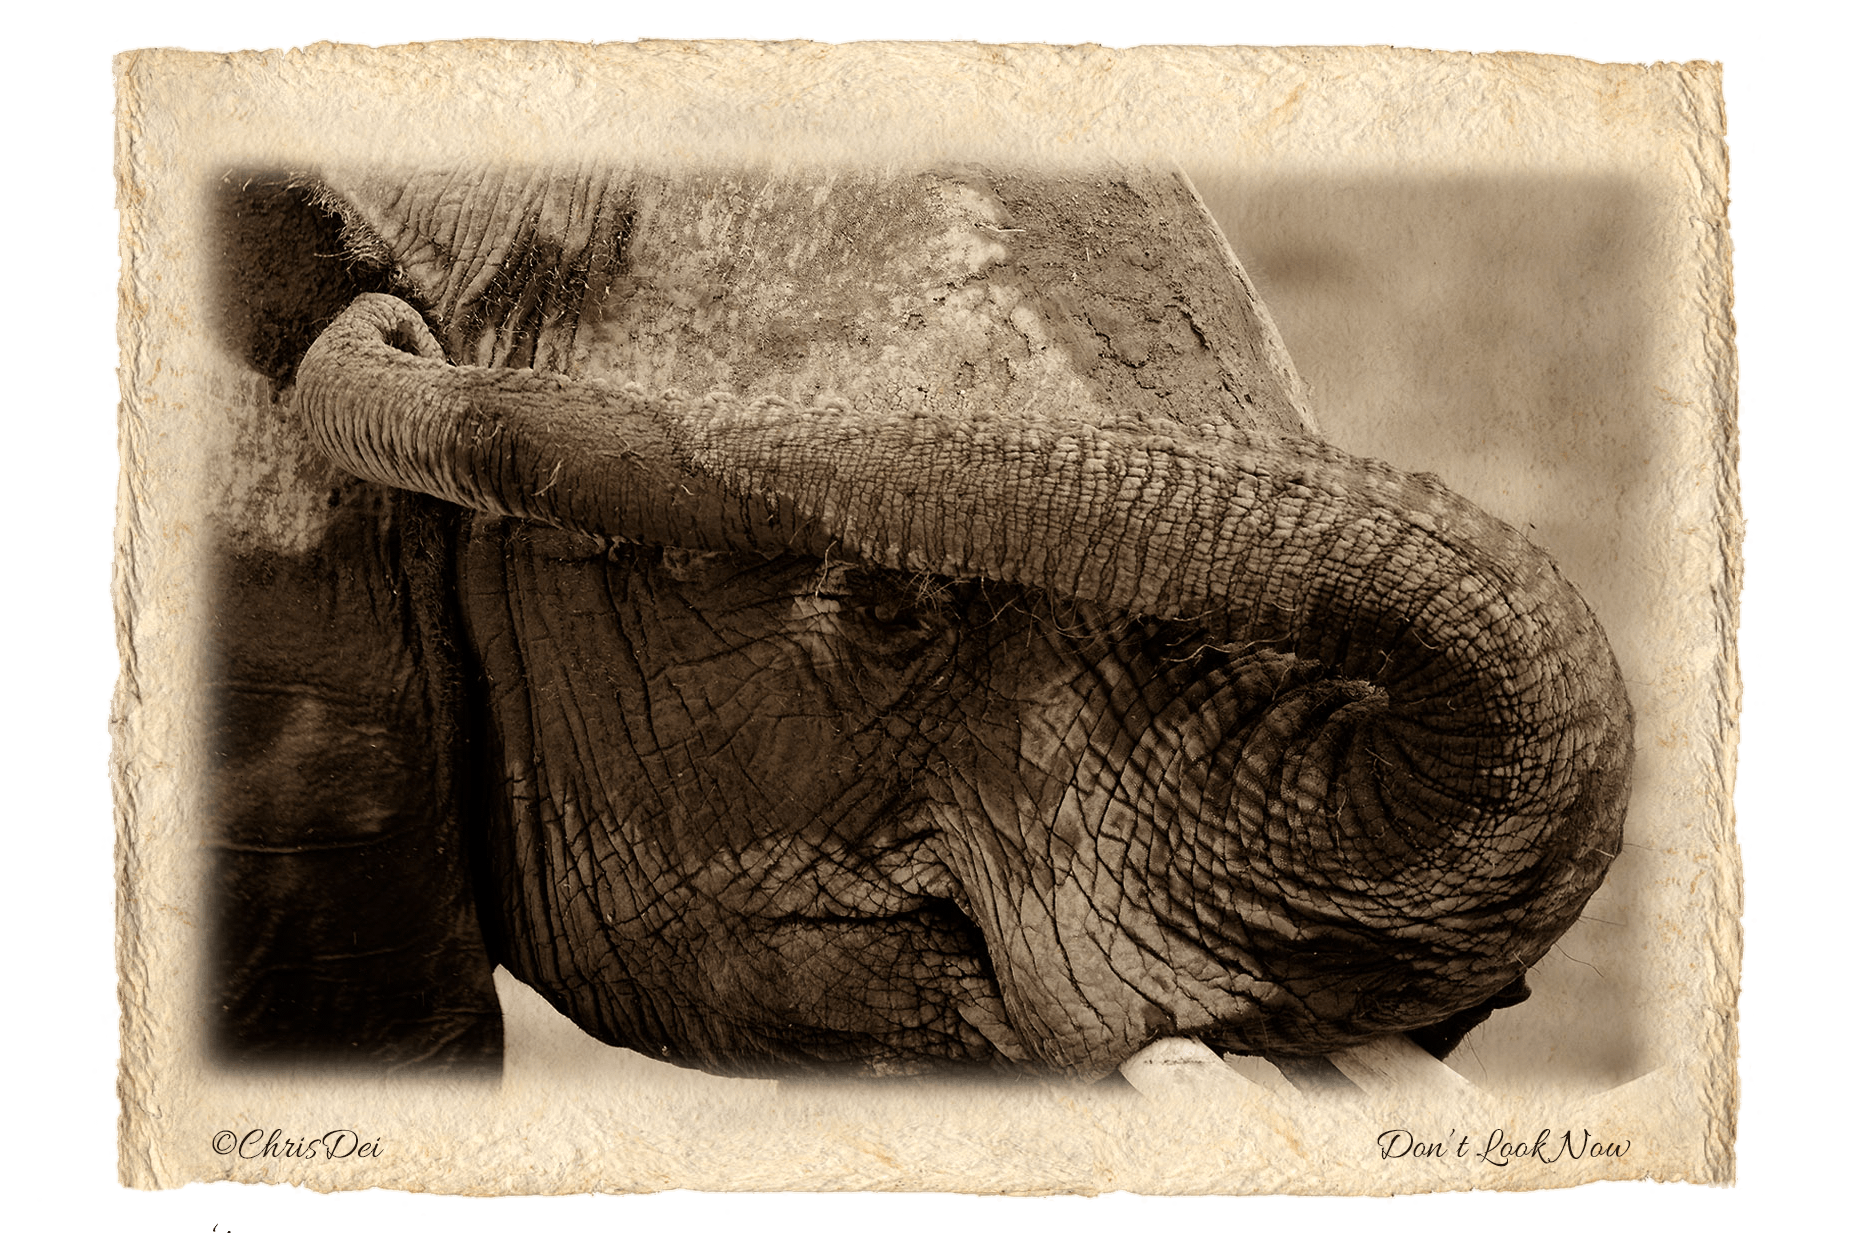 elephant, Africa, Tanzania, Kenya, Fine art photography, African Wildlife, Serengeti, Chris Dei Photography